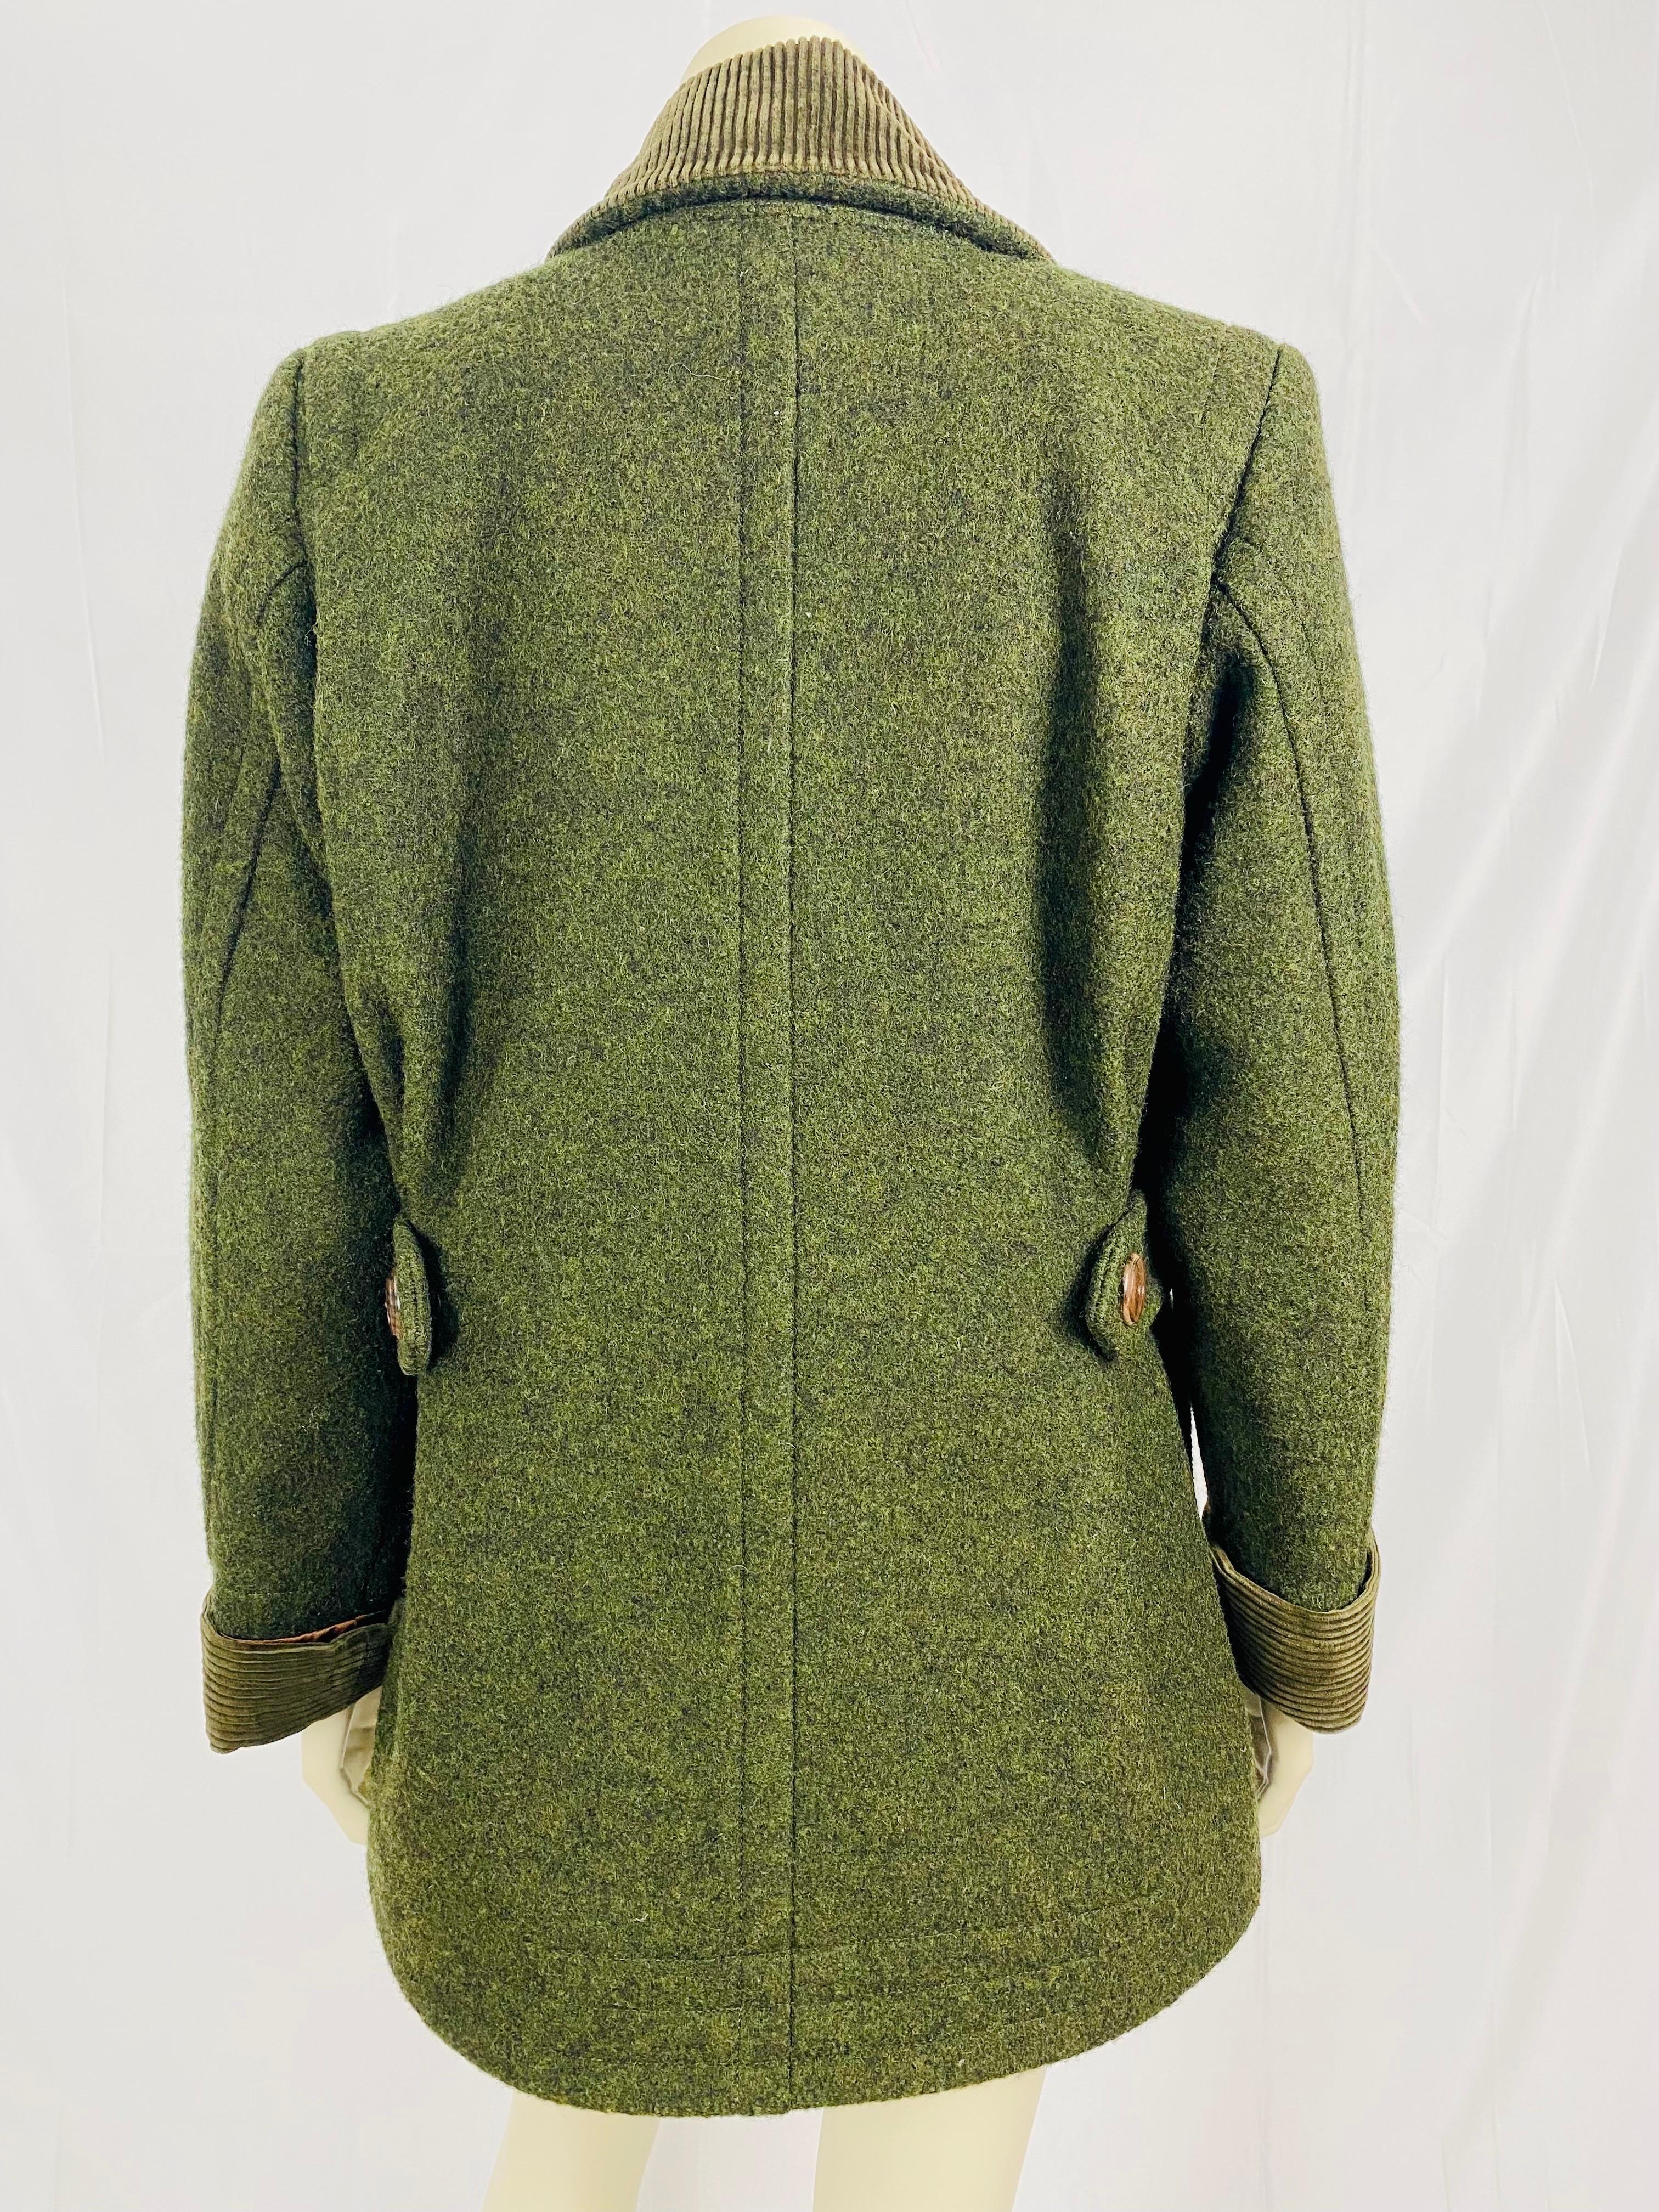 Superb vintage Yves saint laurent winter jacket circa 1970, in khaki boiled wool 1